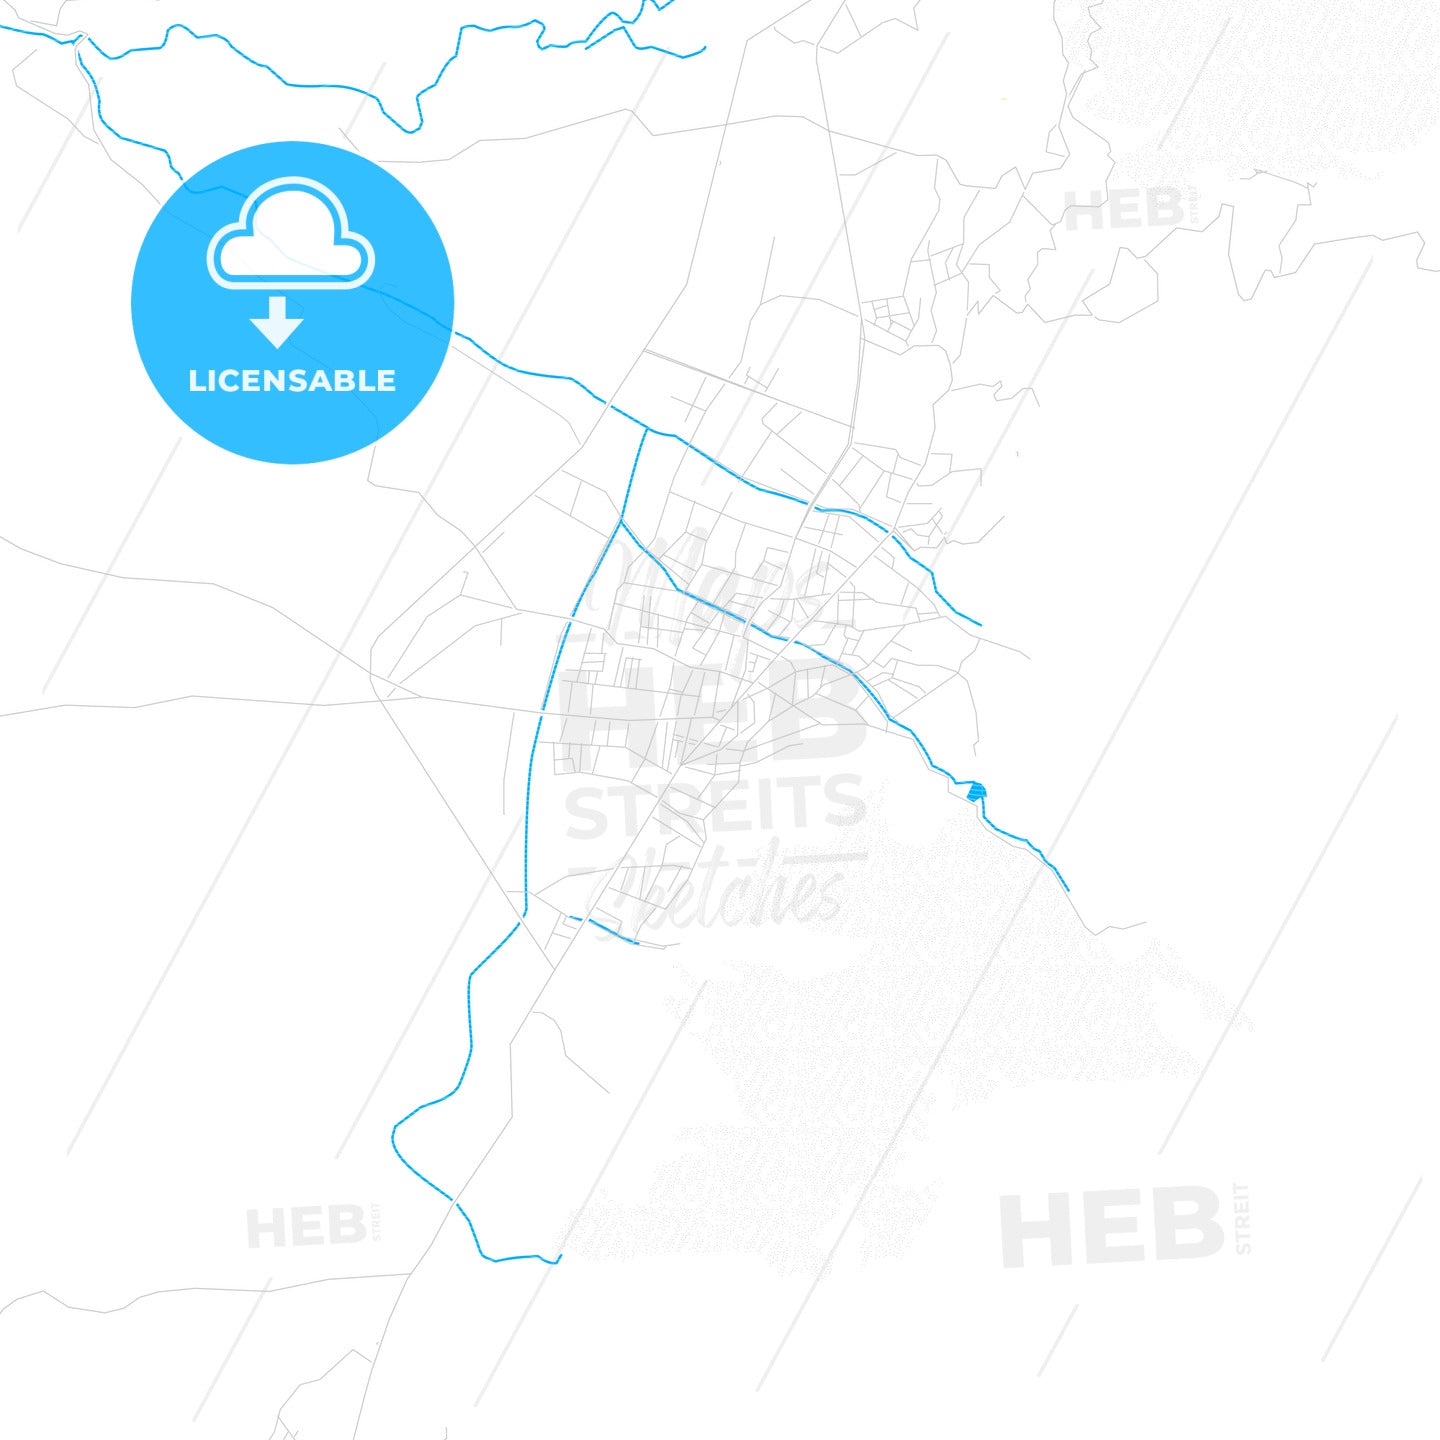 Düziçi, Turkey PDF vector map with water in focus